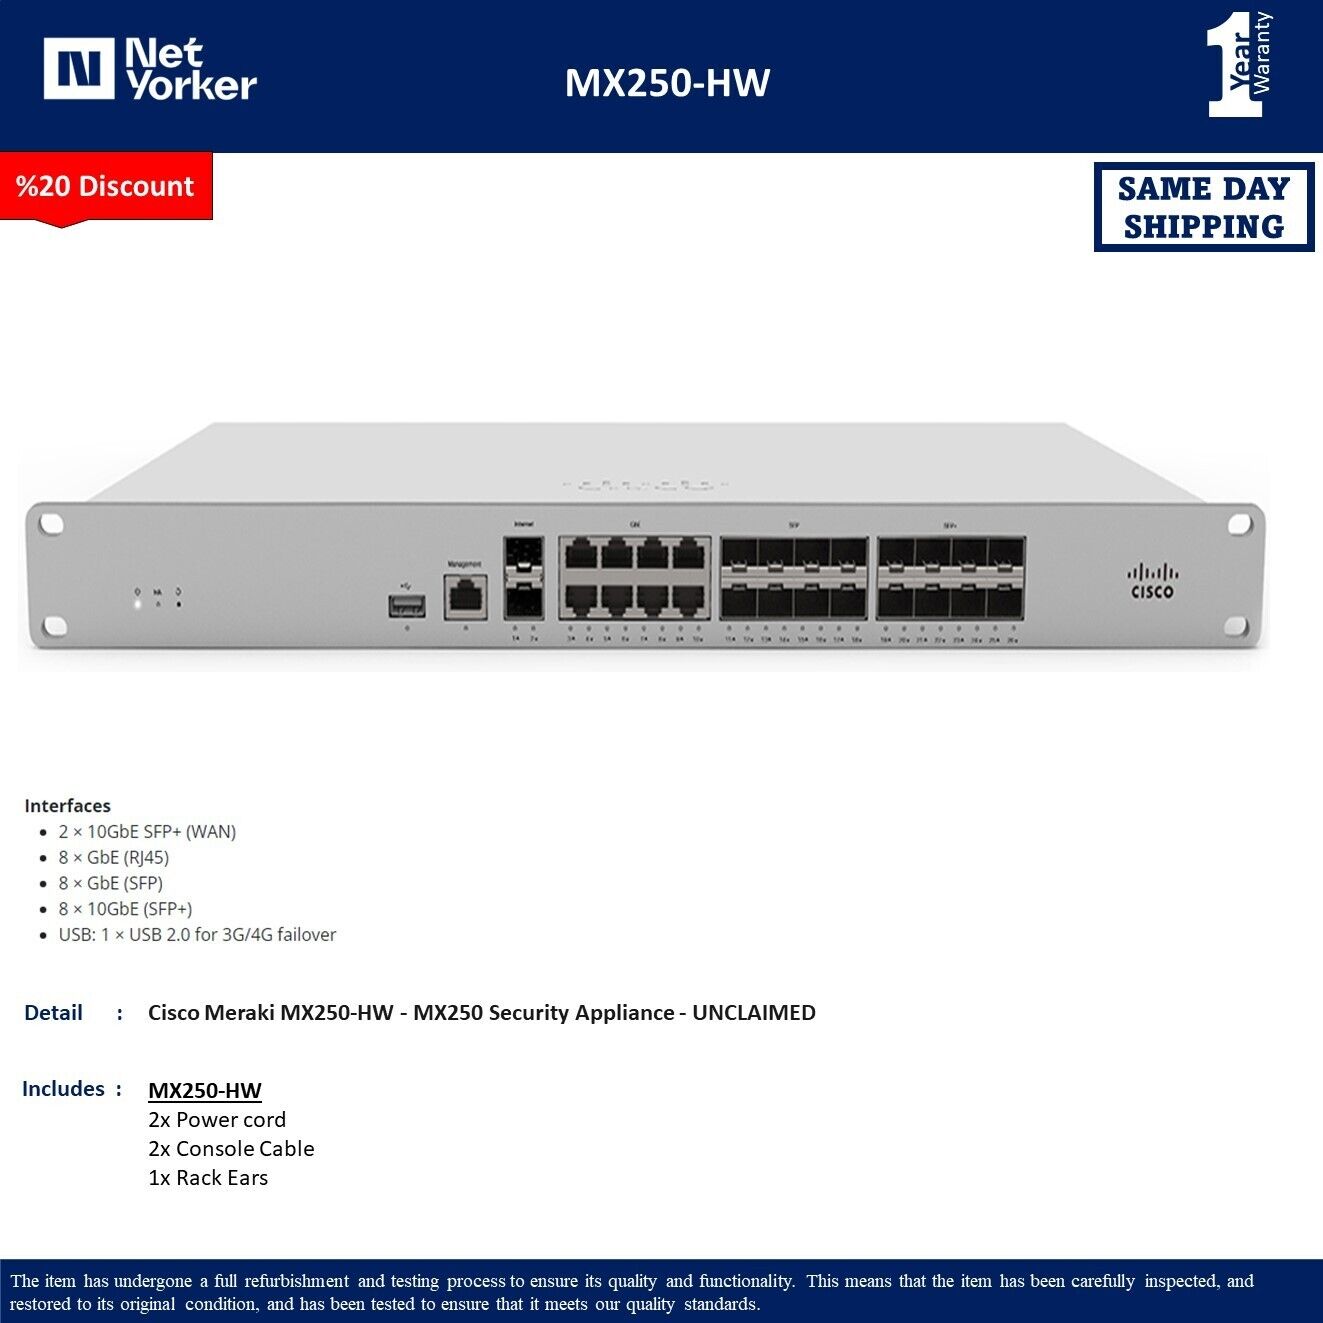 Cisco Meraki MX250-HW - MX250 Security Appliance - UNCLAIMED - Same Day Shipping